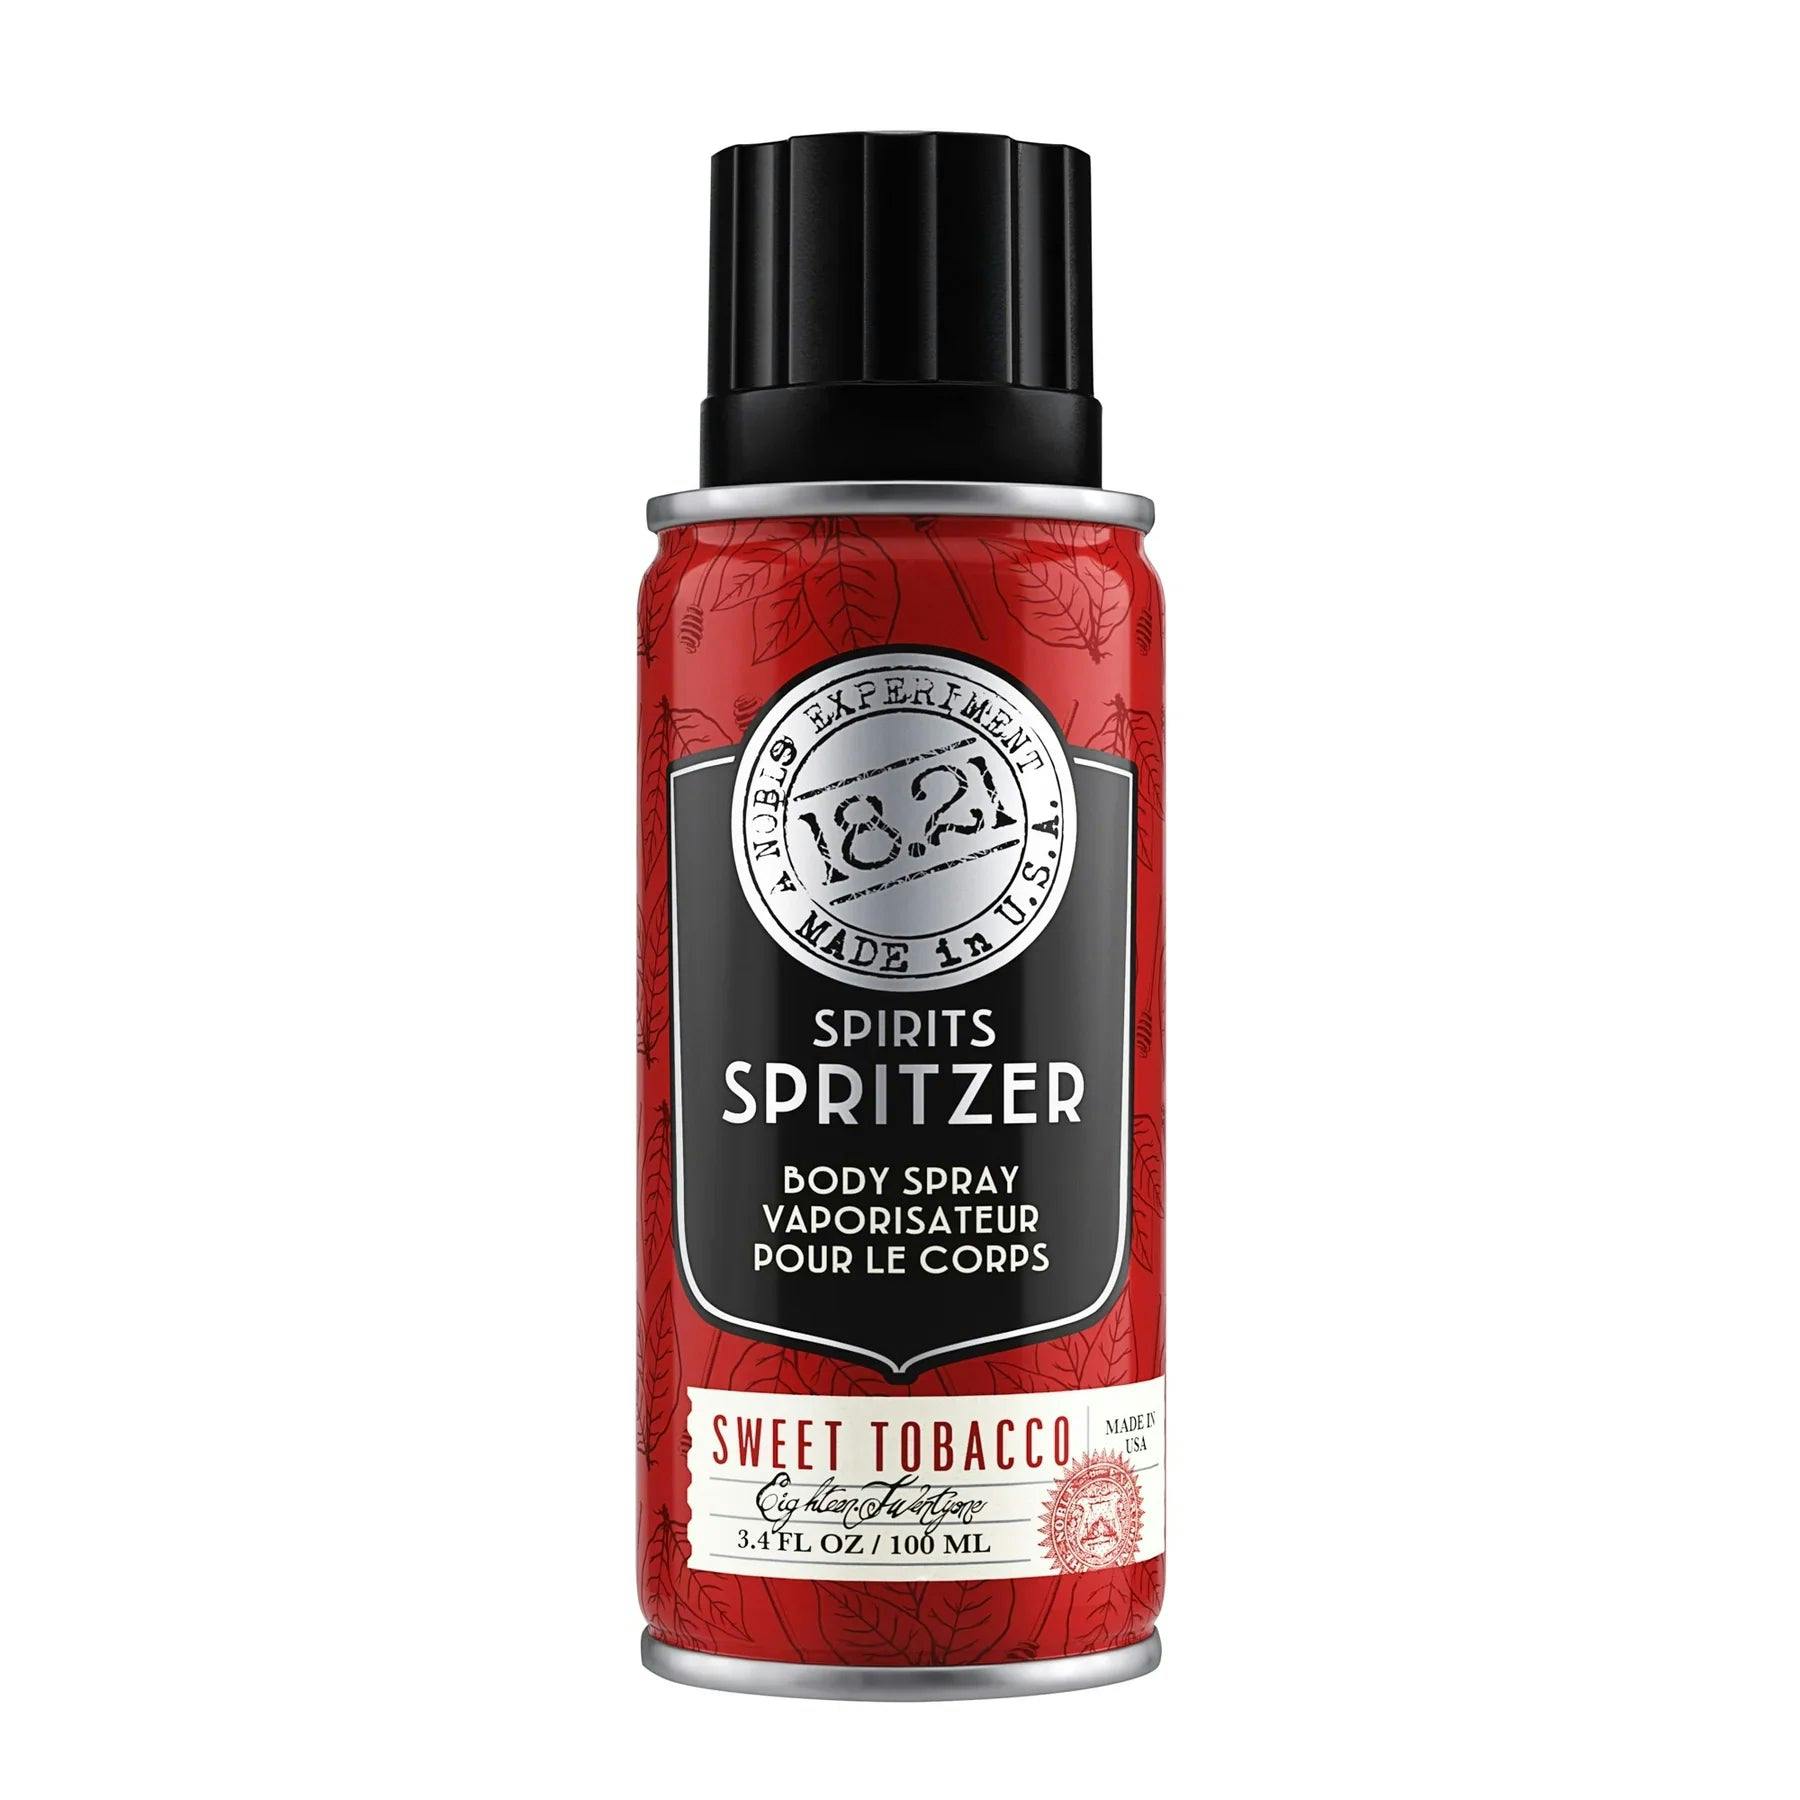 18.21 Spirits Spritzer Body Spray 100ml - Sweet Tobacco